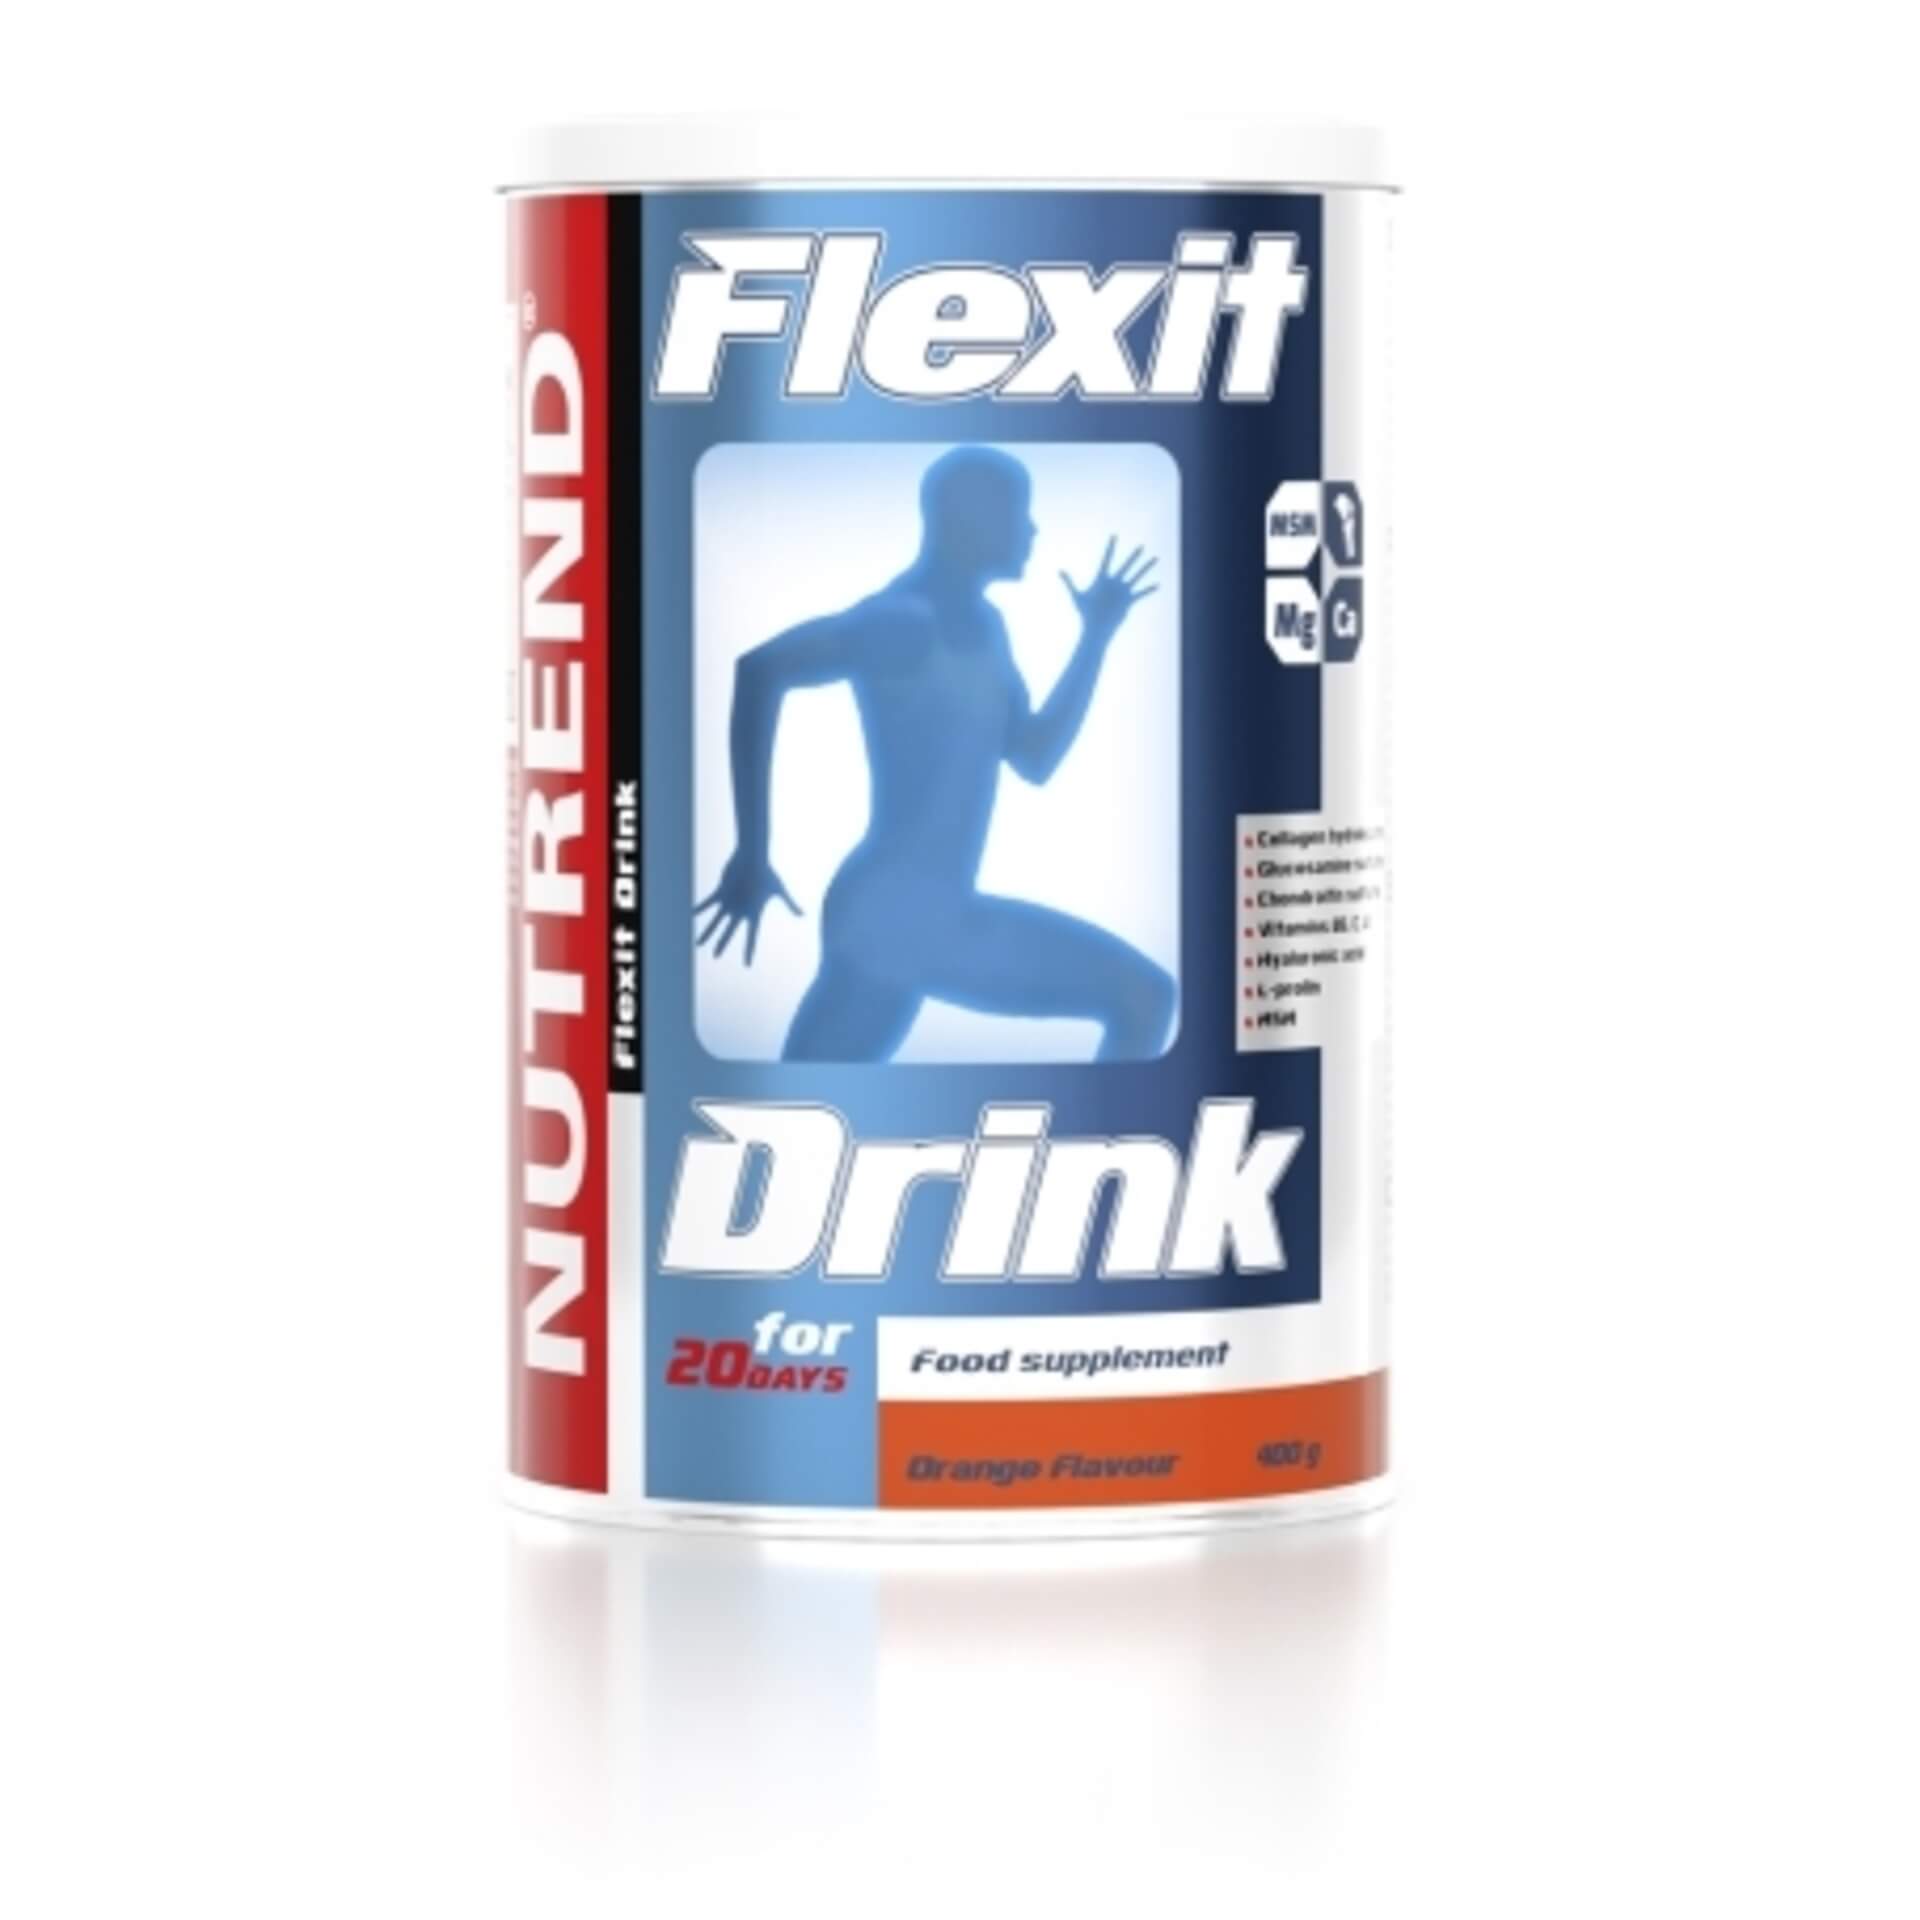 Nutrend Flexit Drink 400g - pomeranč